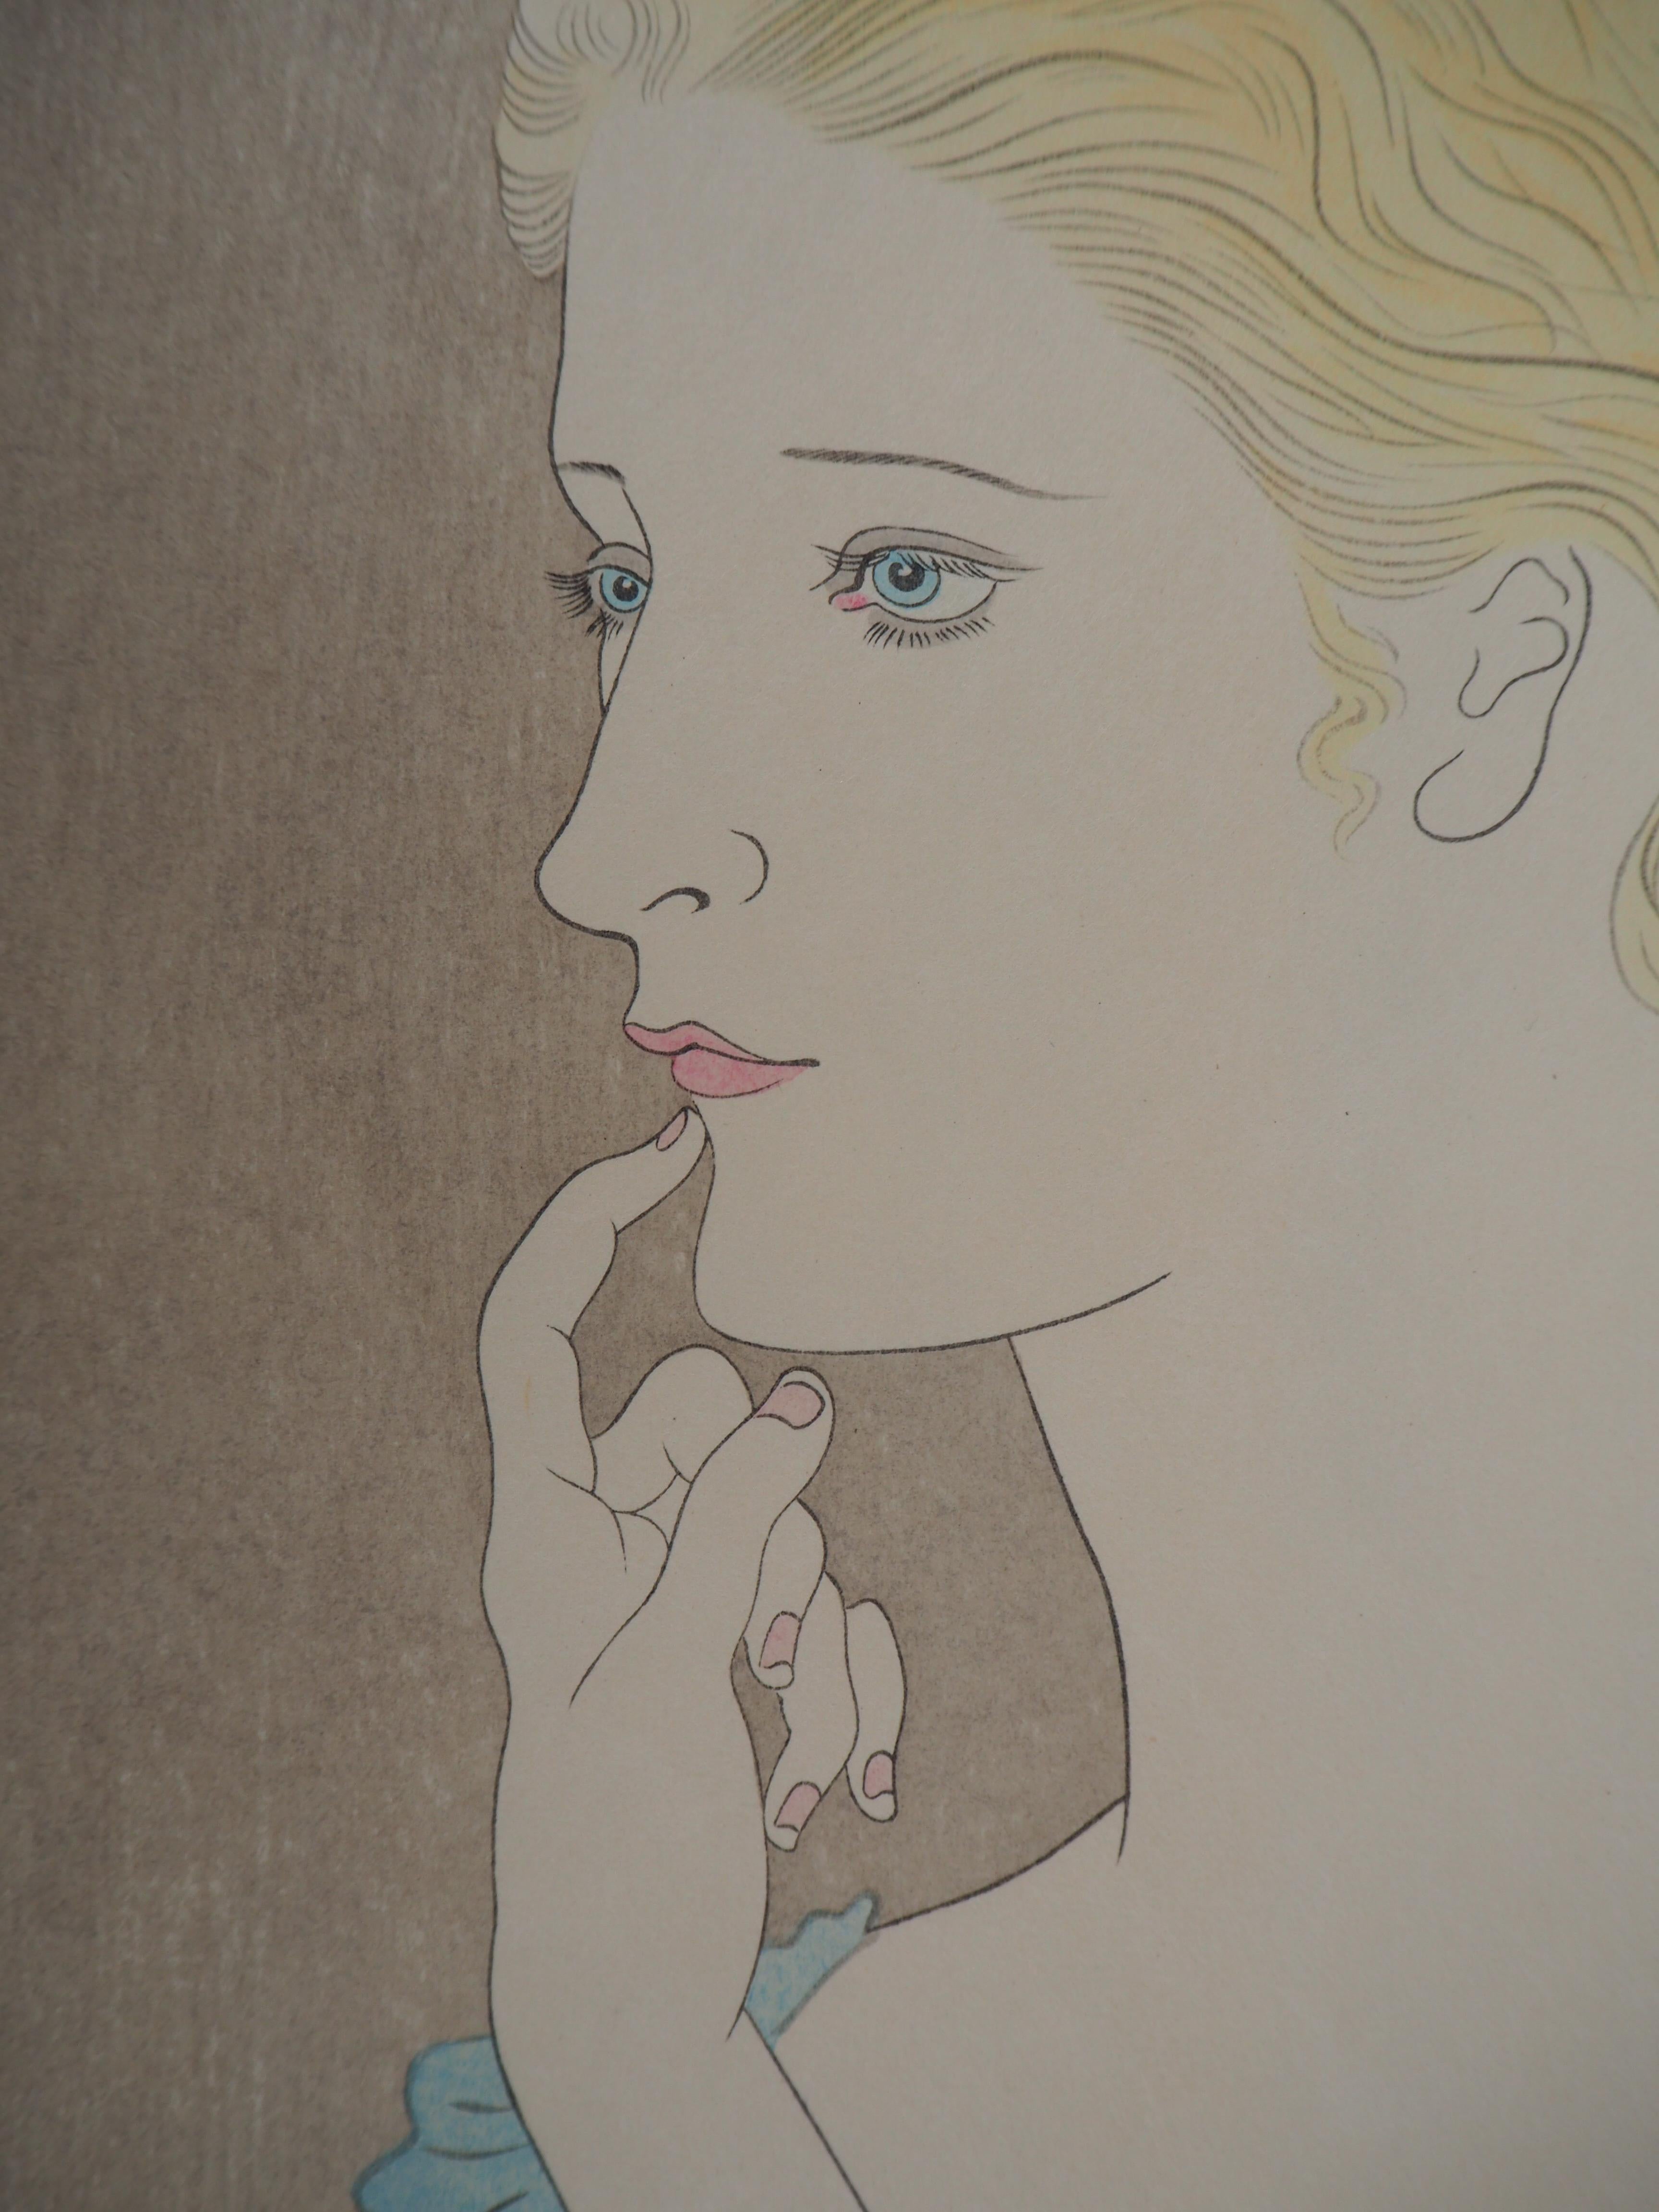 Blond Hair Woman - Original woodcut print (Buisson #35.08) - Modern Print by Leonard Tsuguharu Foujita